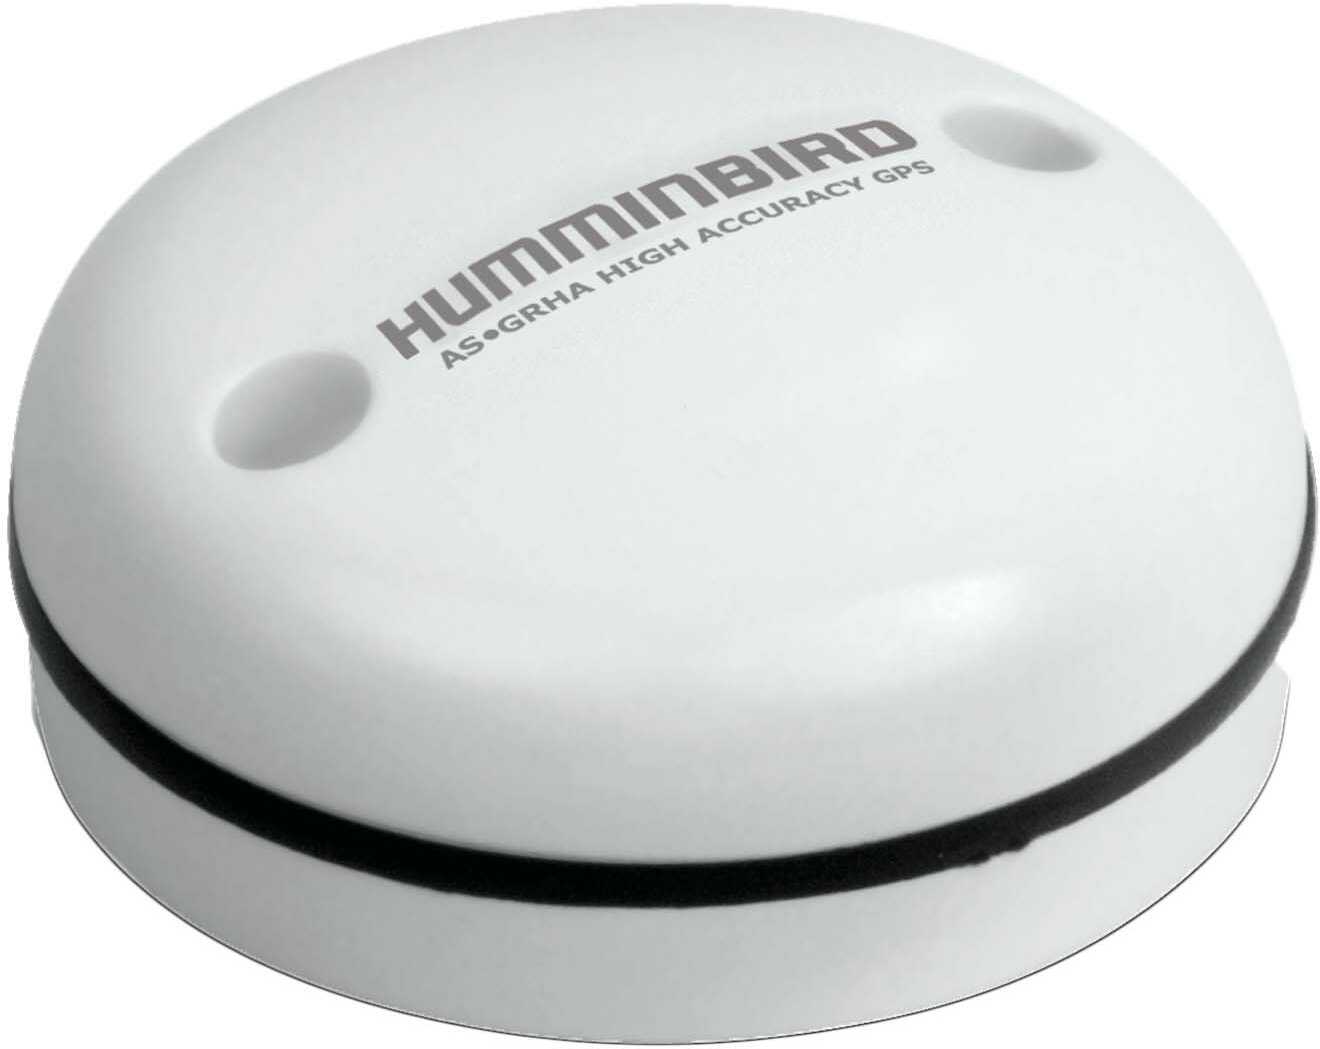 Humminbird AS GPS HS Precision GPS Antenna w/Heading Sensor